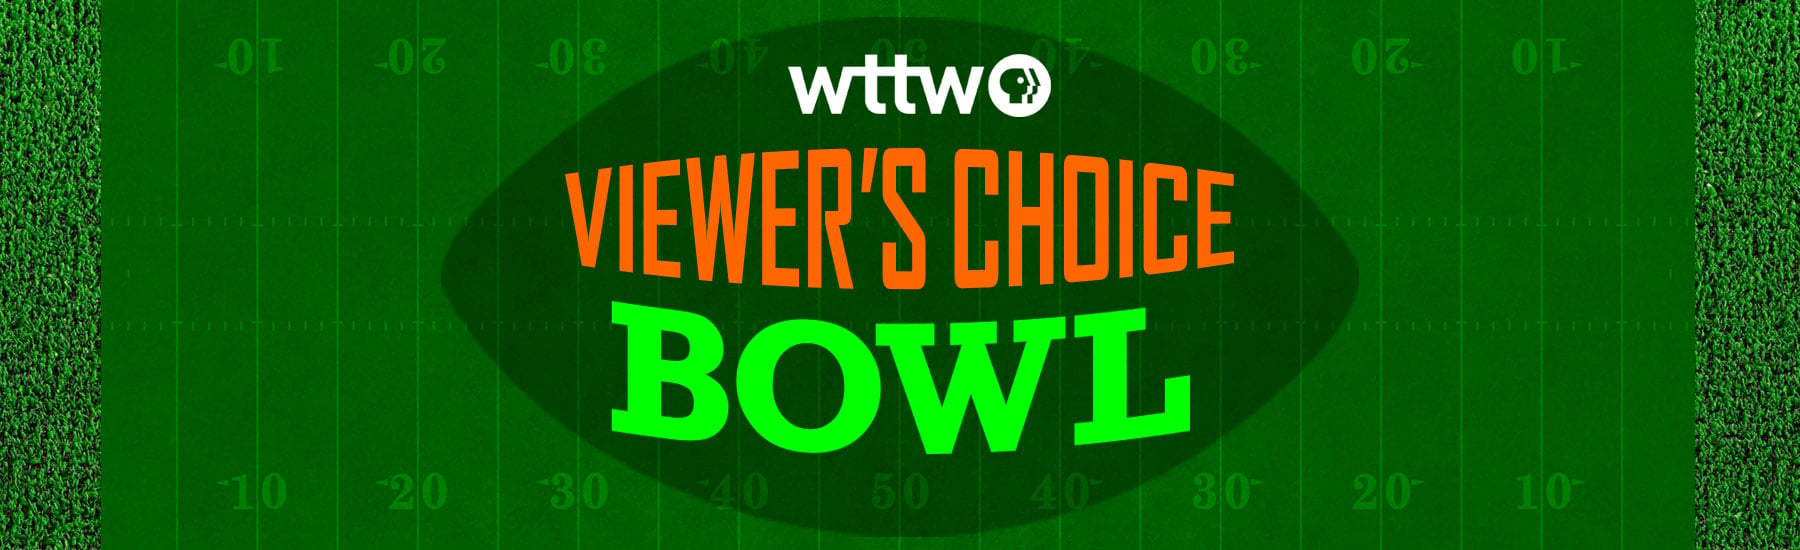 WTTW Viewer's Choice Bowl